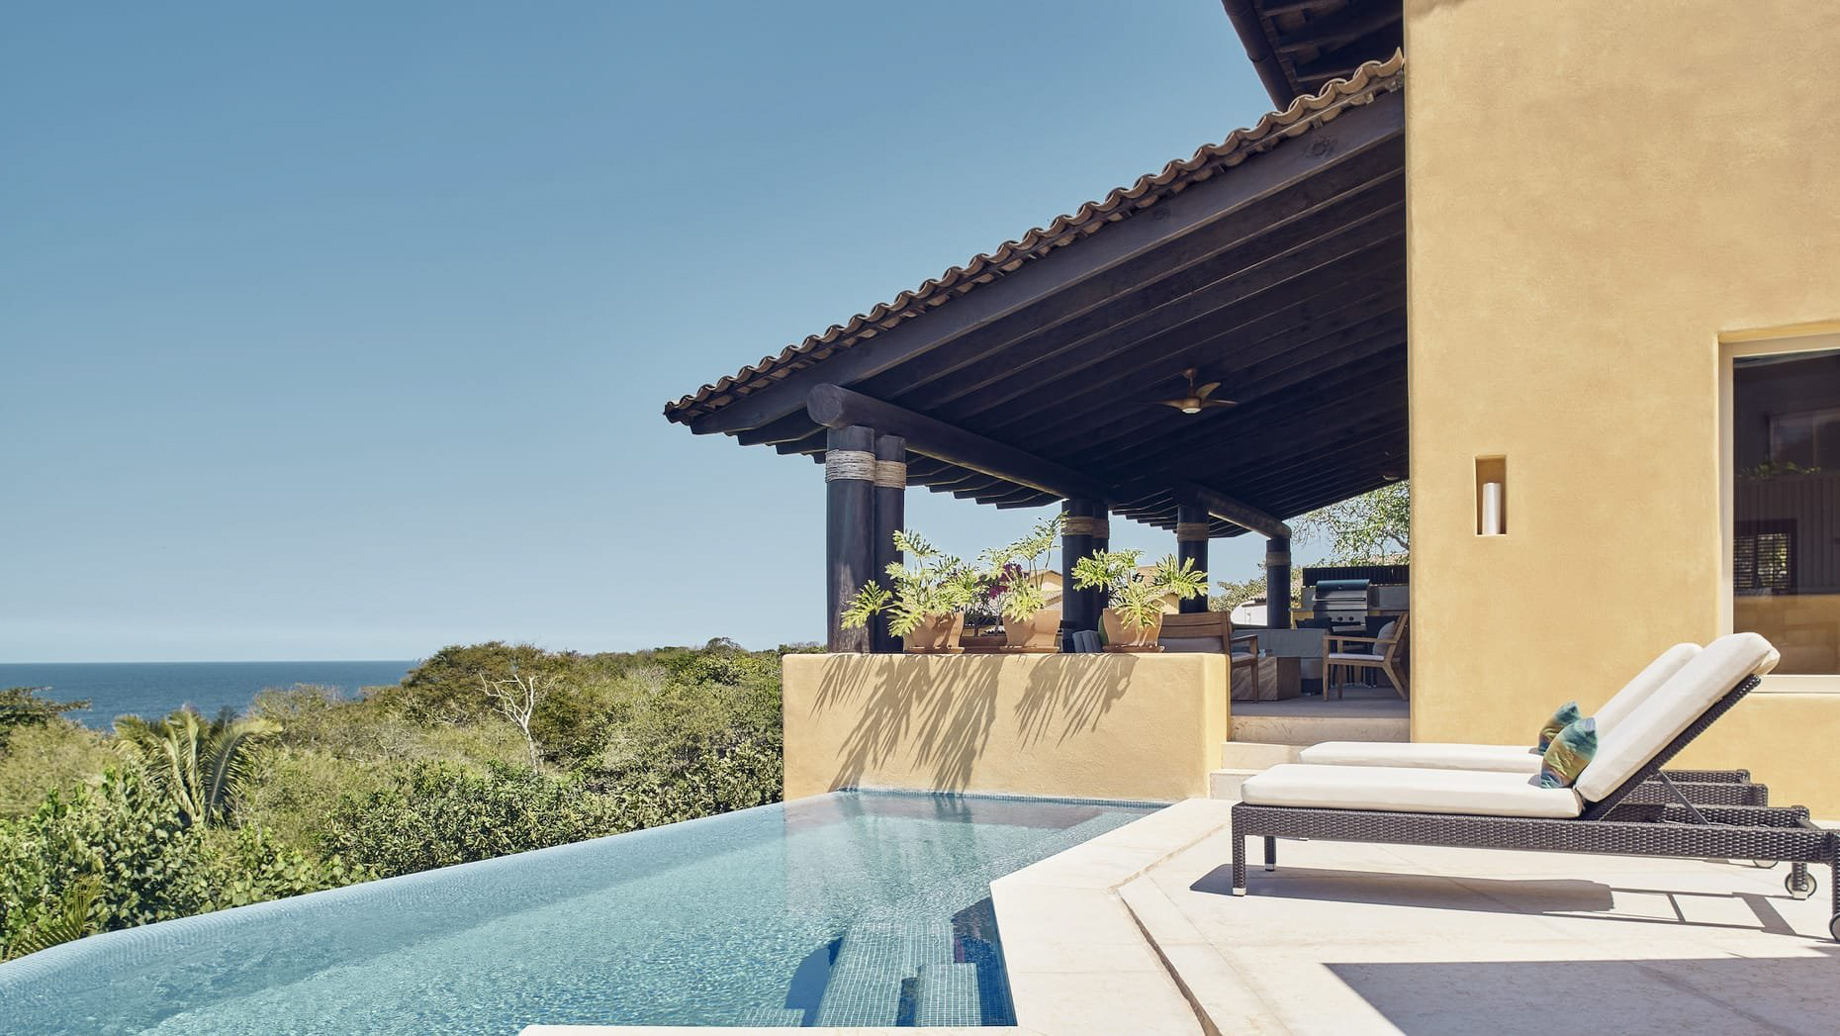 Four Seasons Resort Punta Mita - Nayarit, Mexico - Verano Ocean View Villa Pool Deck